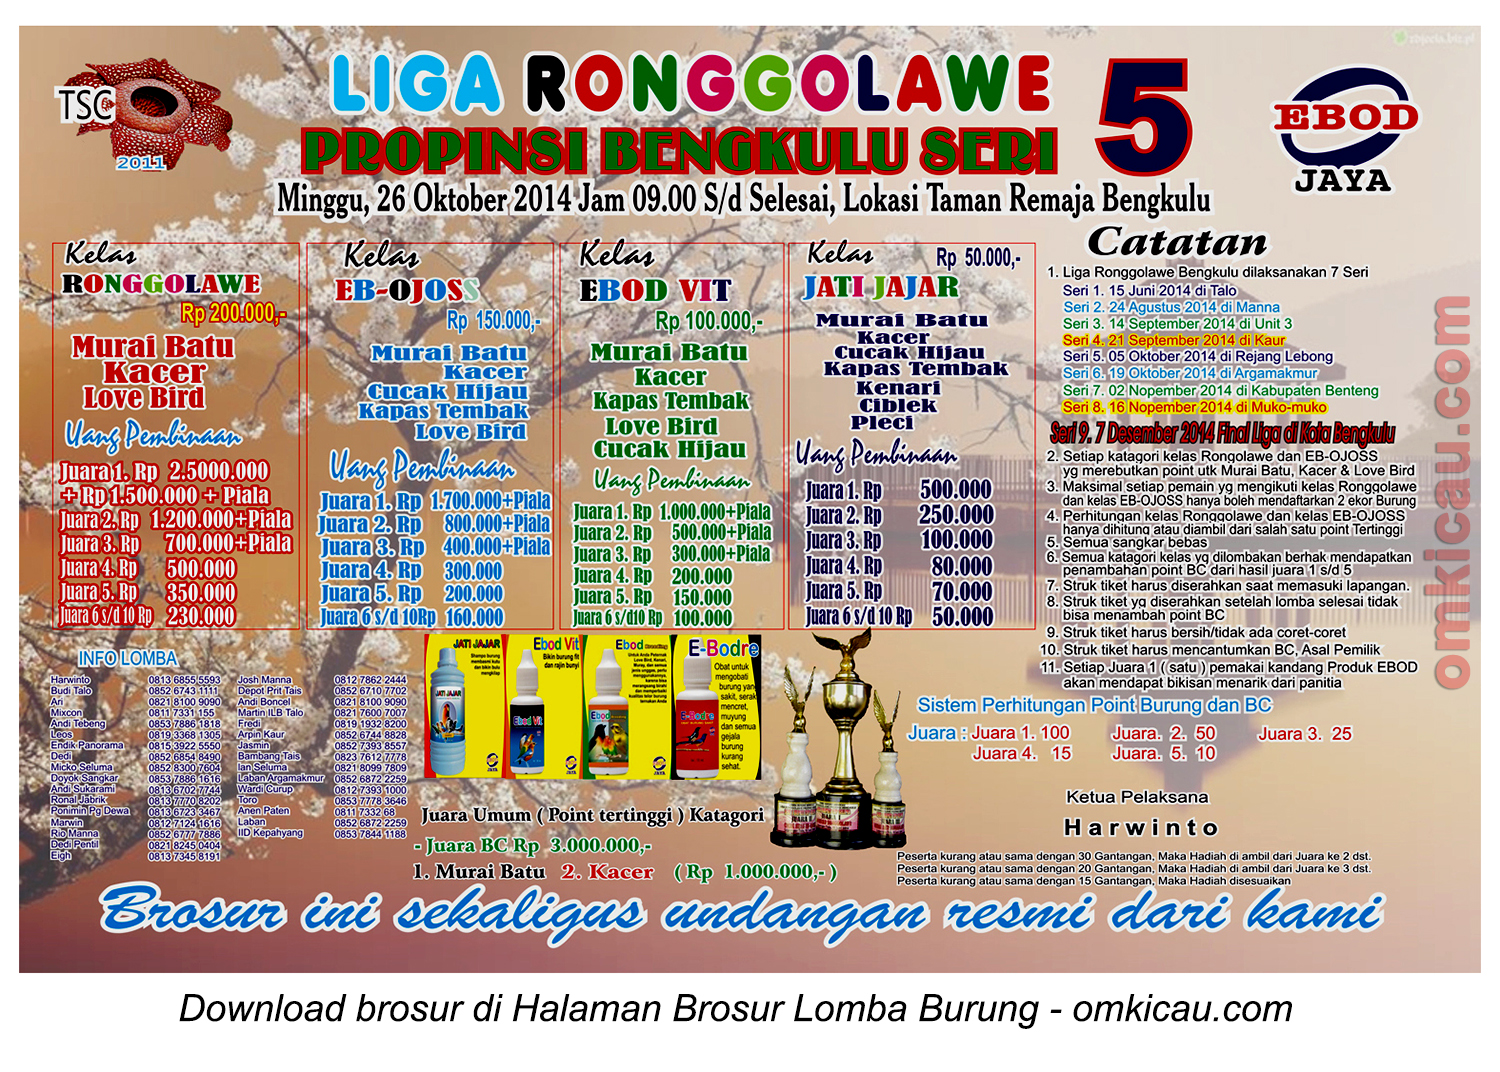 Brosur Liga Ronggolawe Provinsi Bengkulu Seri 5, Bengkulu, 26 Oktober 2014